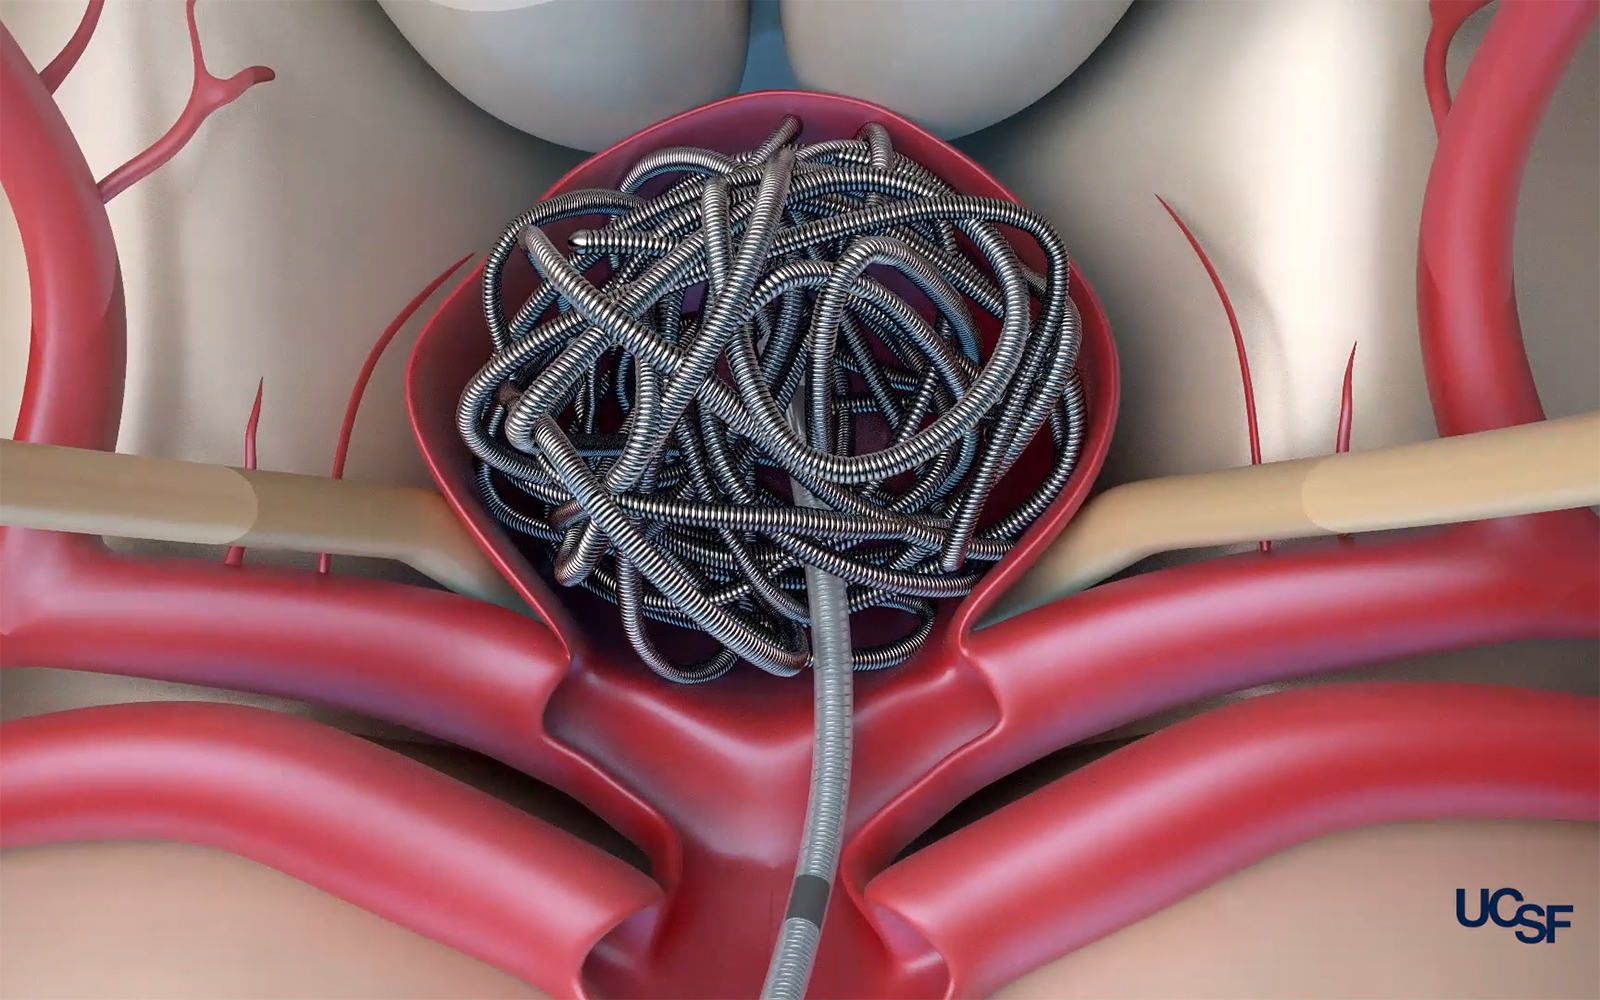 Illustration showing end-vascular coiling procedure